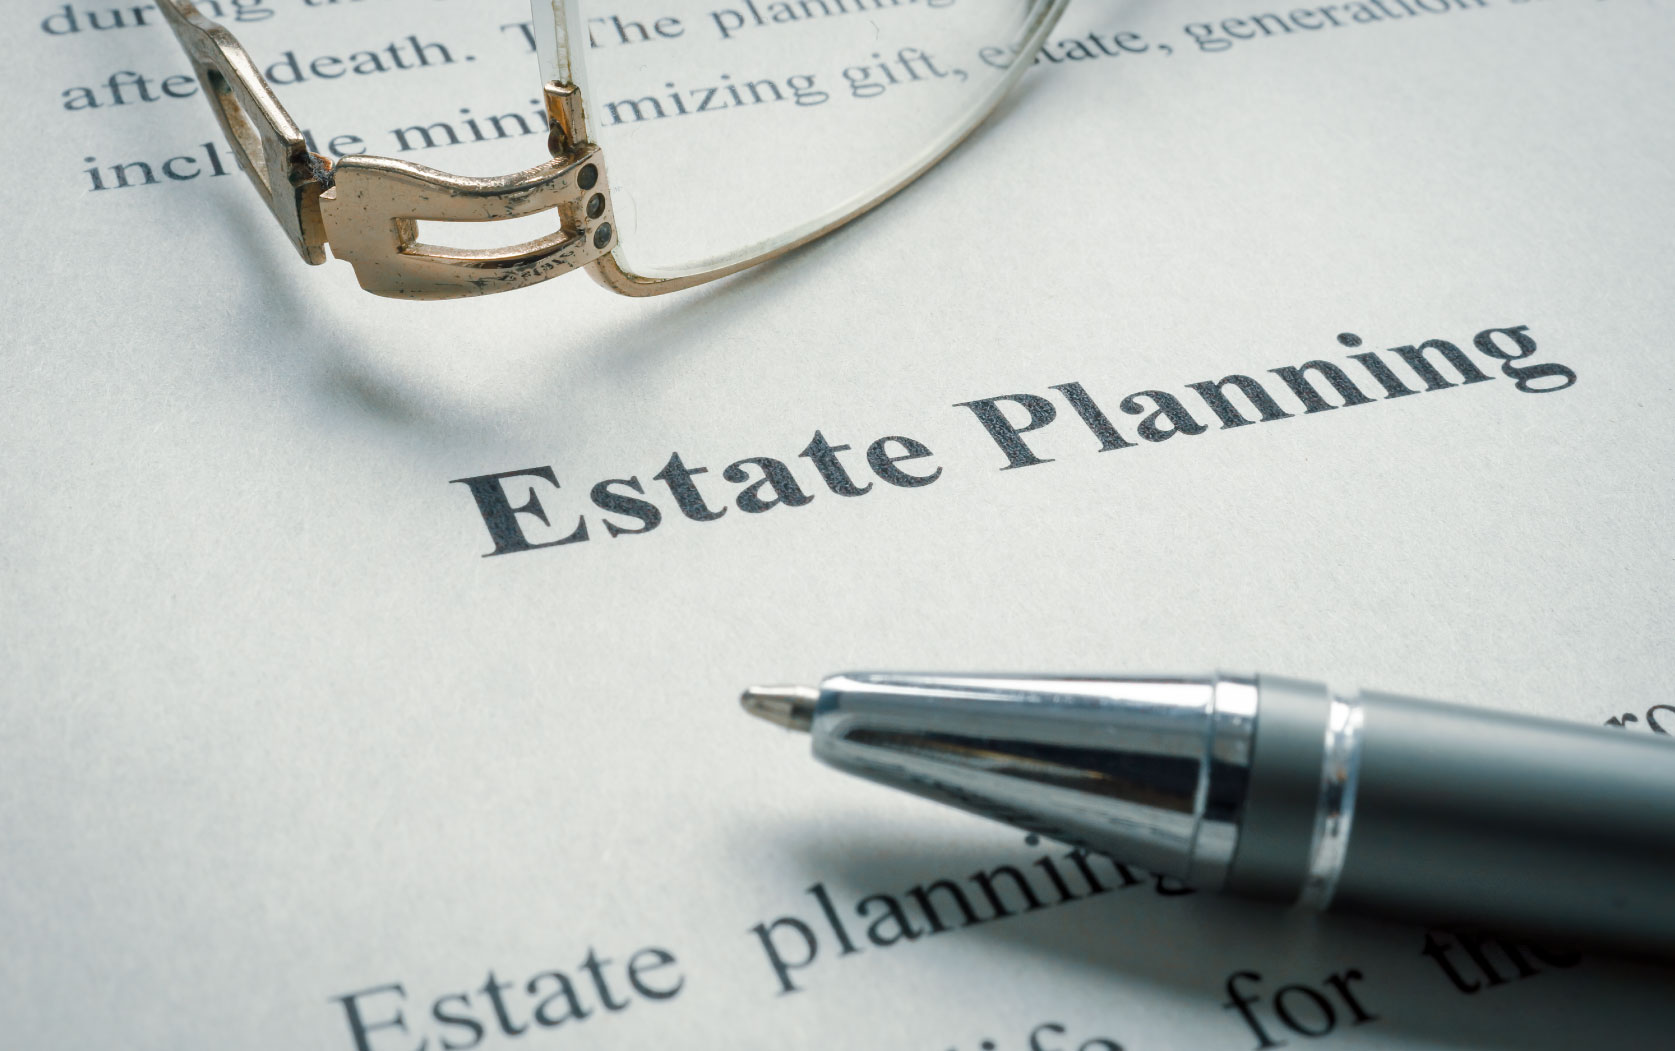 Family Trust Estate Planning